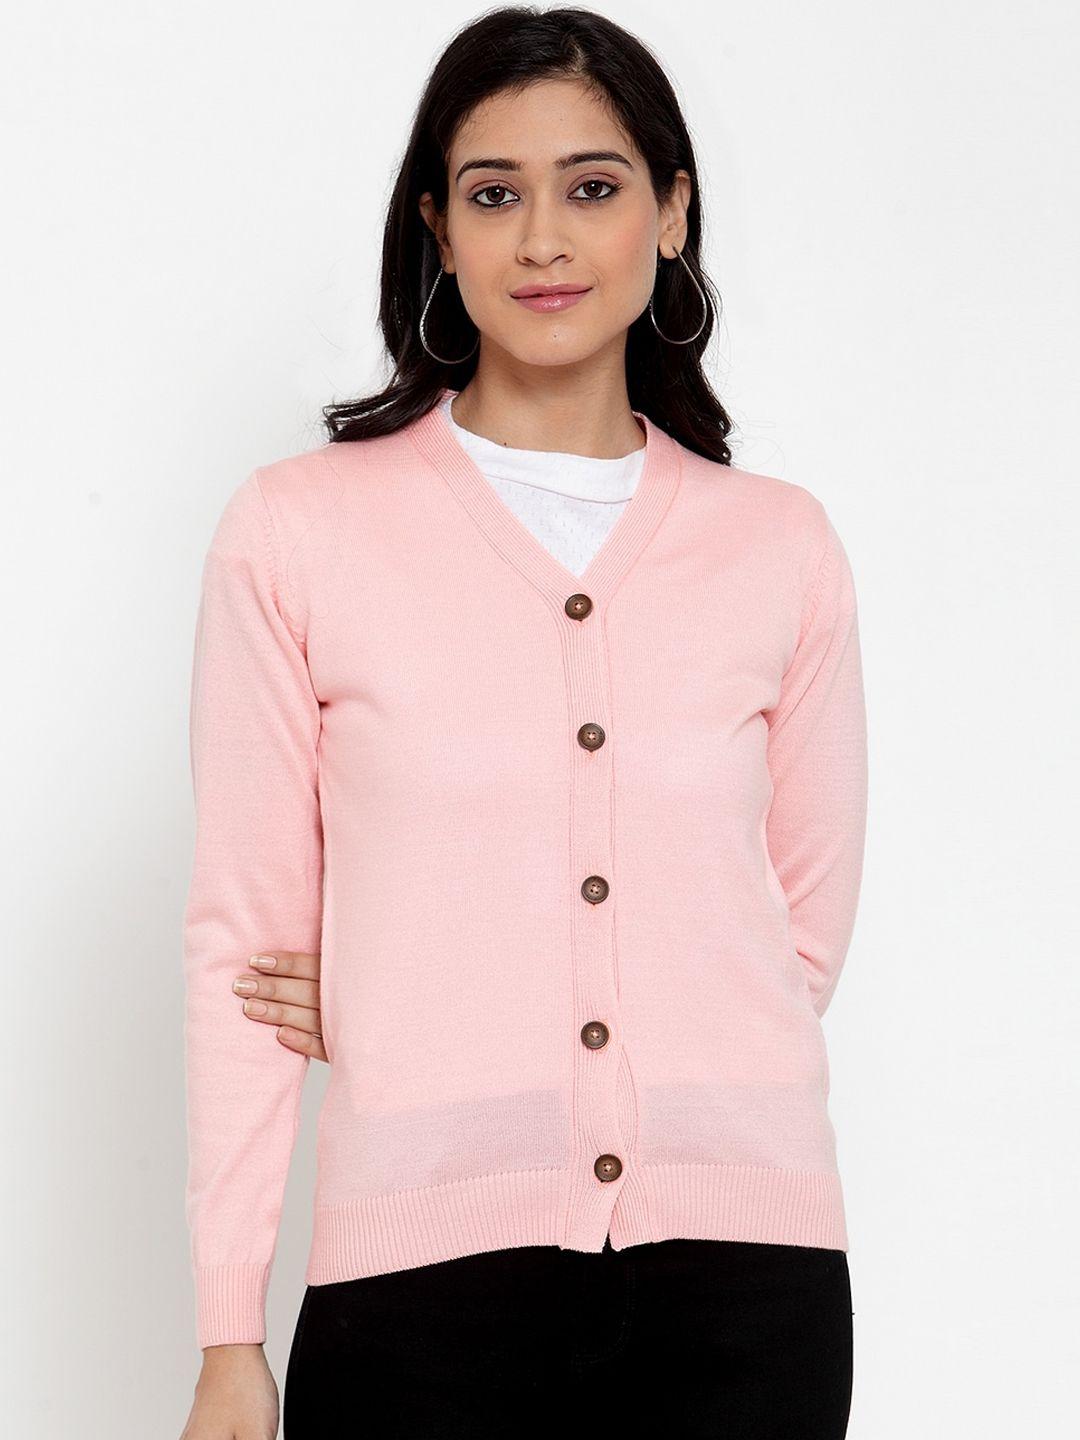 kalt women acrylic pink solid cardigan sweater